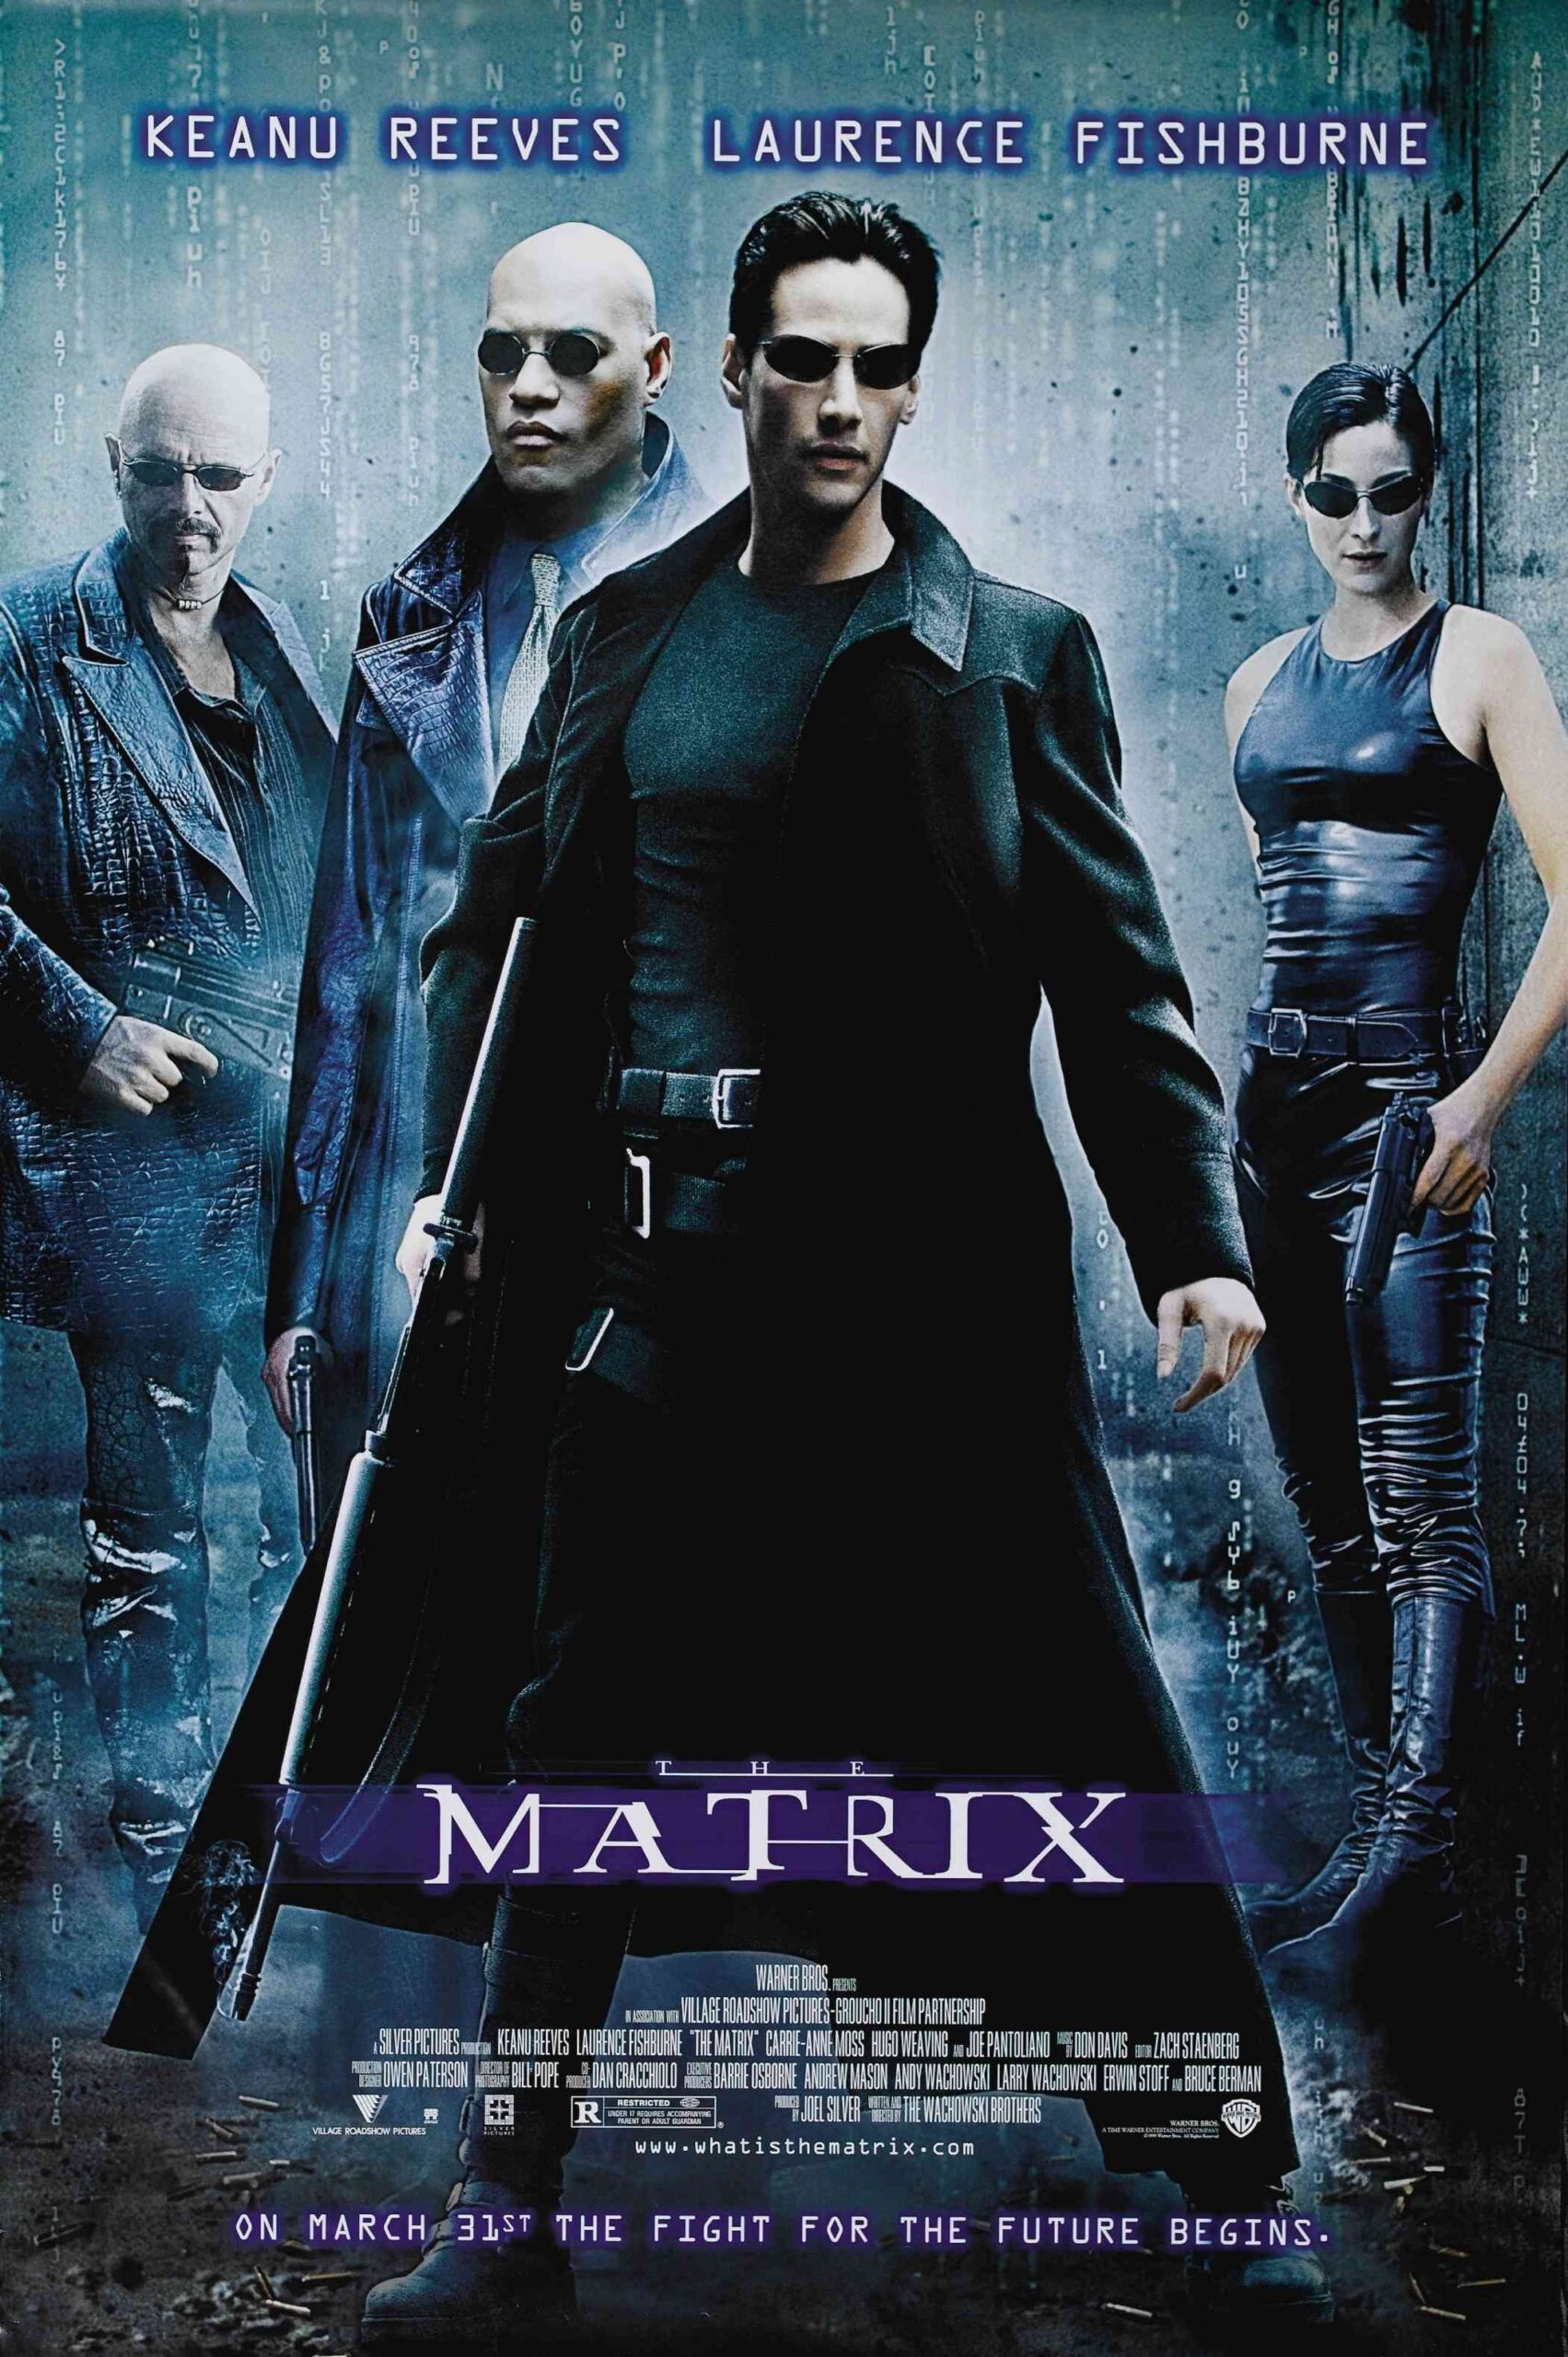 FULL MOVIE: The Matrix (1999)